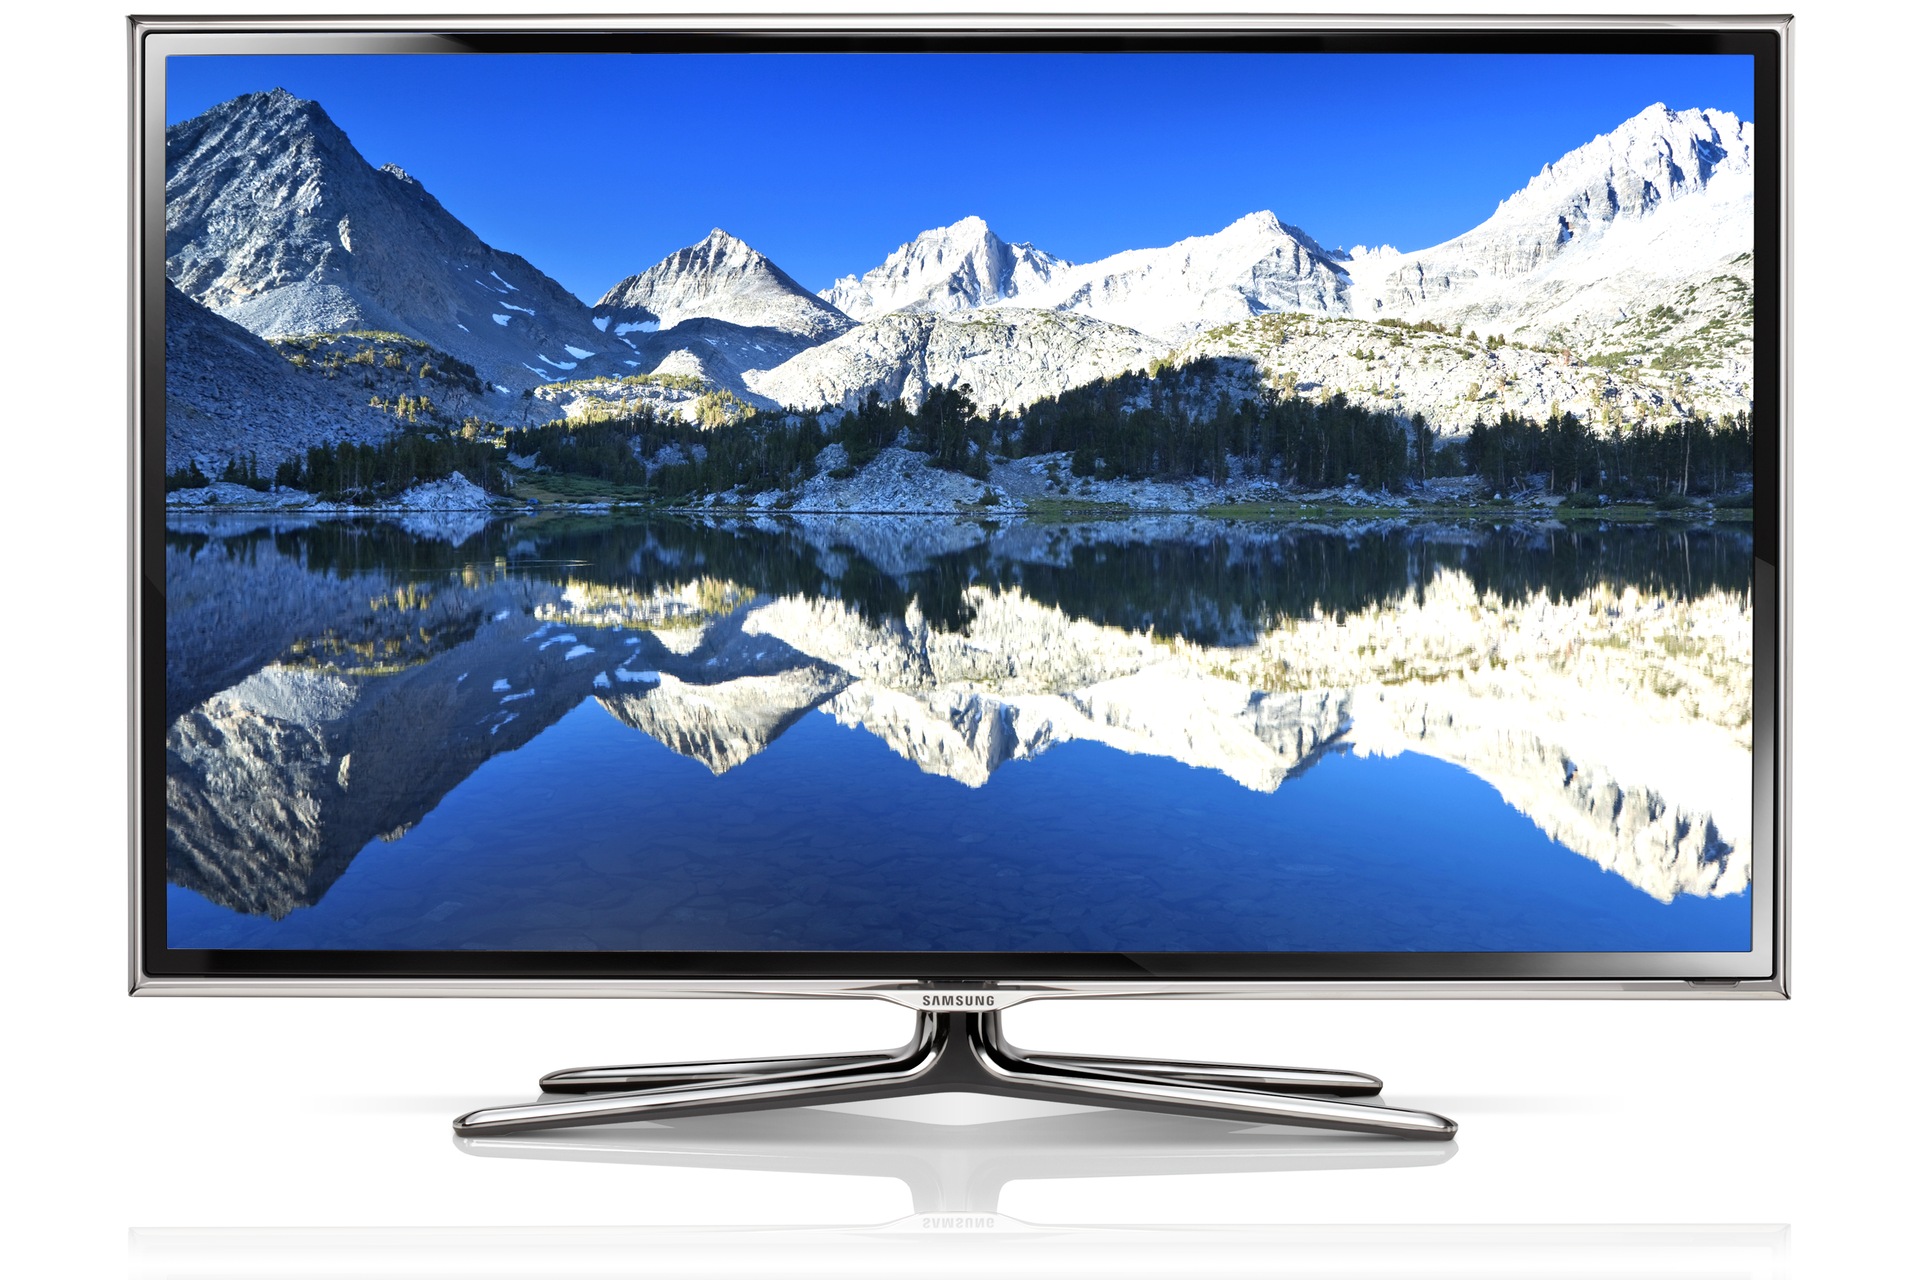 UE46ES6800 LED-TV 46" | Samsung NL